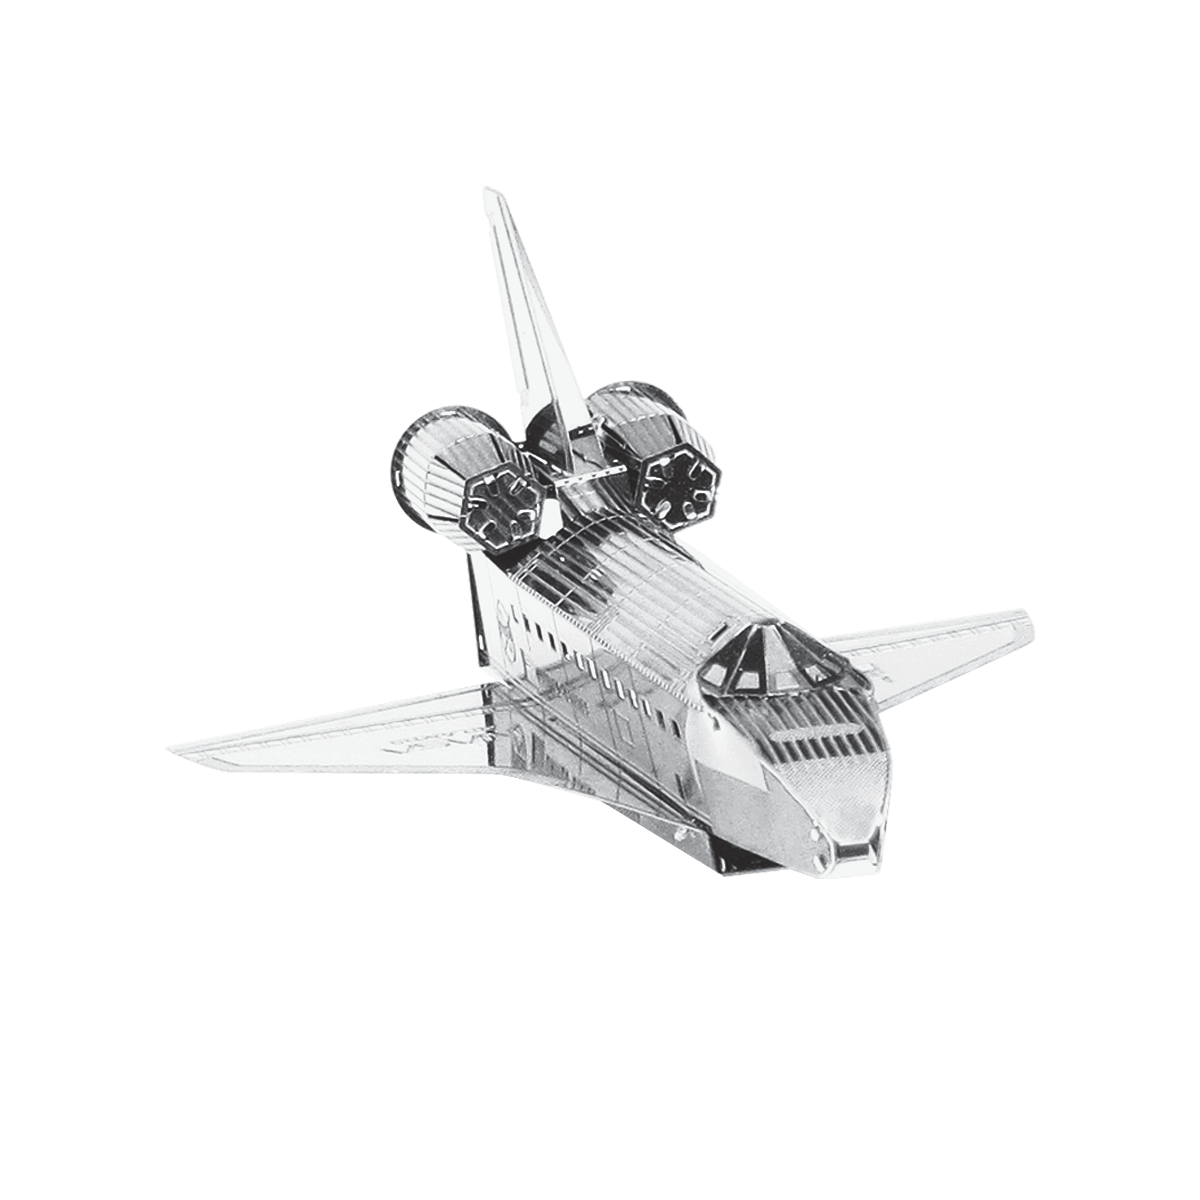 Tweezer  010152 Metal Earth Space Shuttle Atlan 3D Metal  Model 